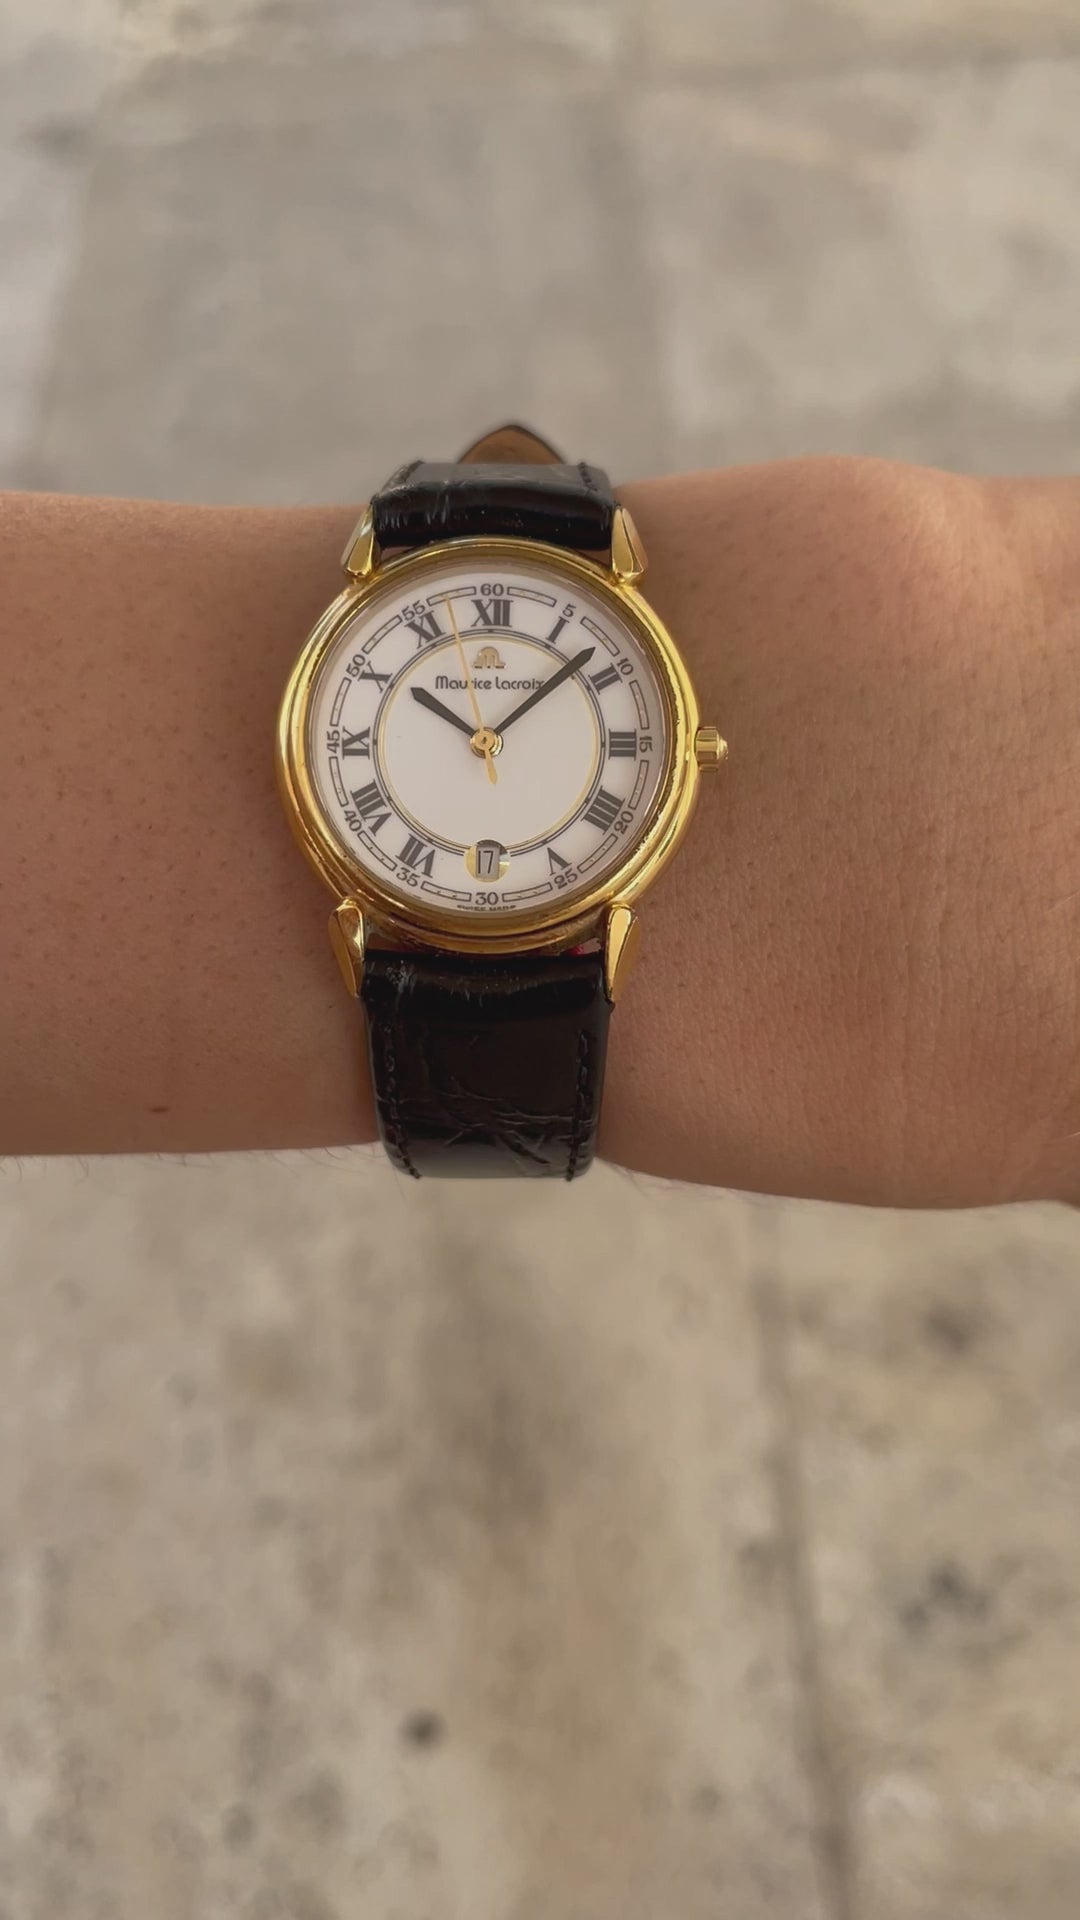 Maurice Lacroix Vintage Ladies Watch: 90s Golden with Classic Roman Numerals | Wrist Shot Video